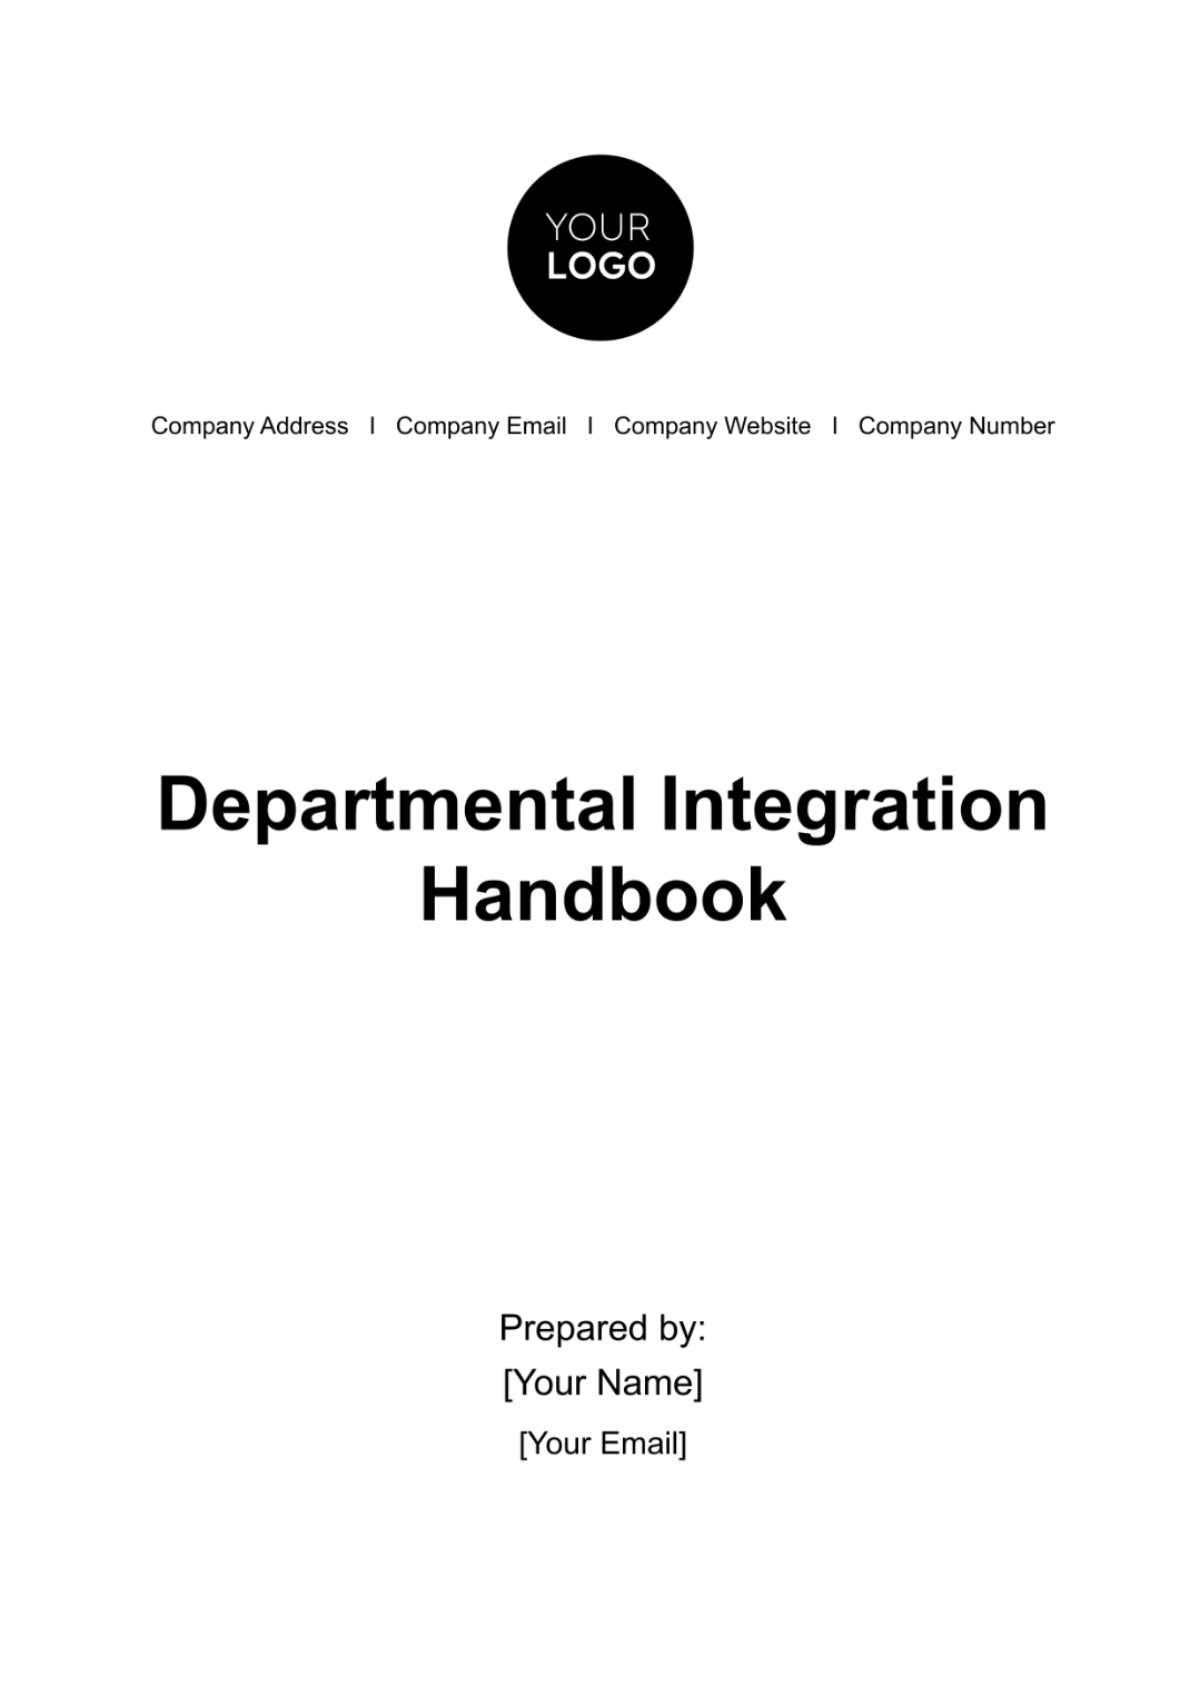 Free Departmental Integration Handbook HR Template